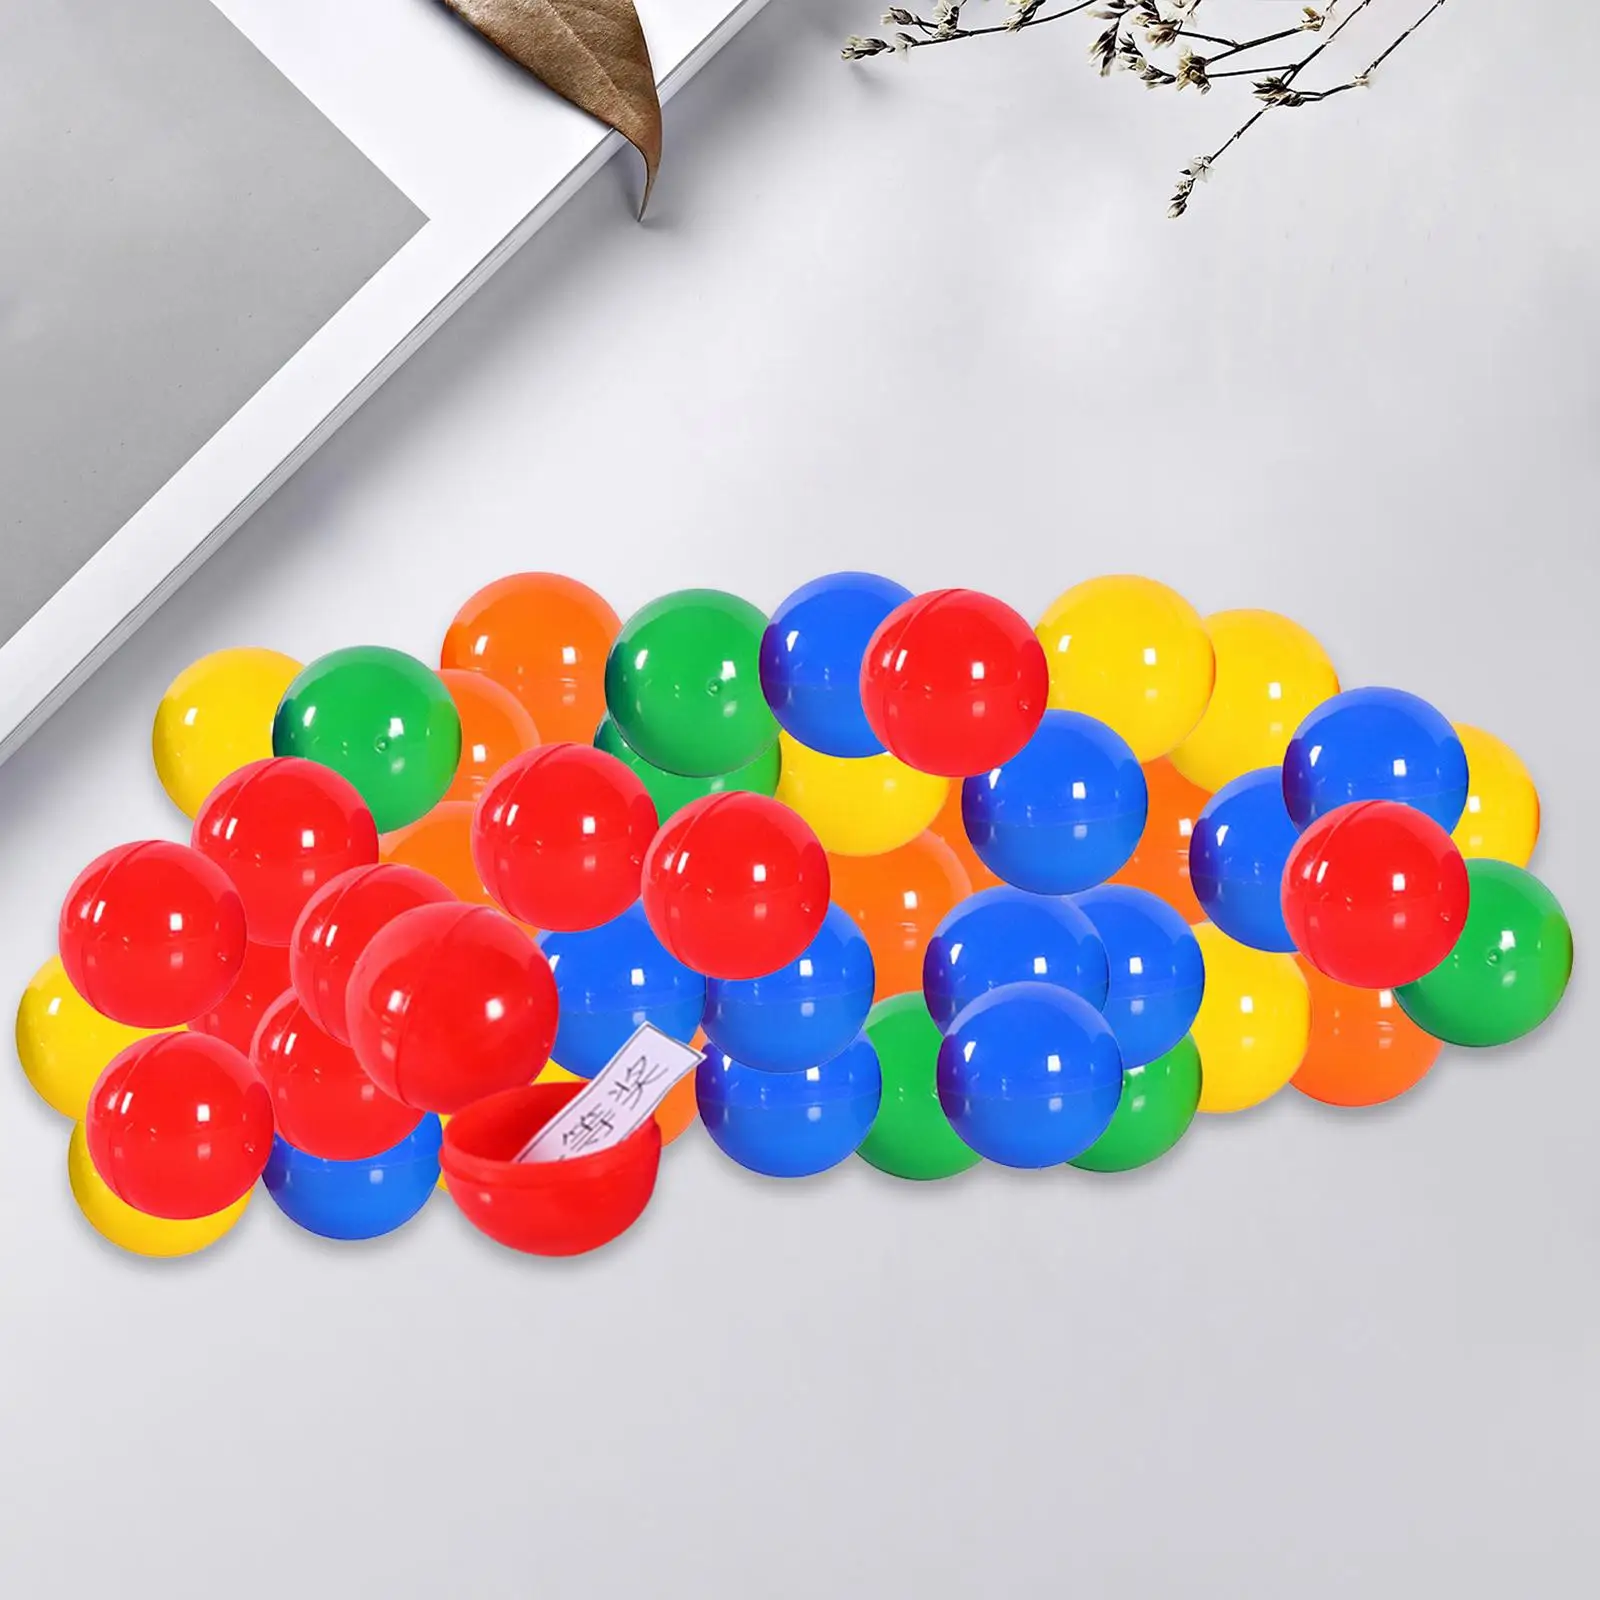 50 Pieces Bingo Ball Accessories Replacement Parts Raffle Balls Calling Balls